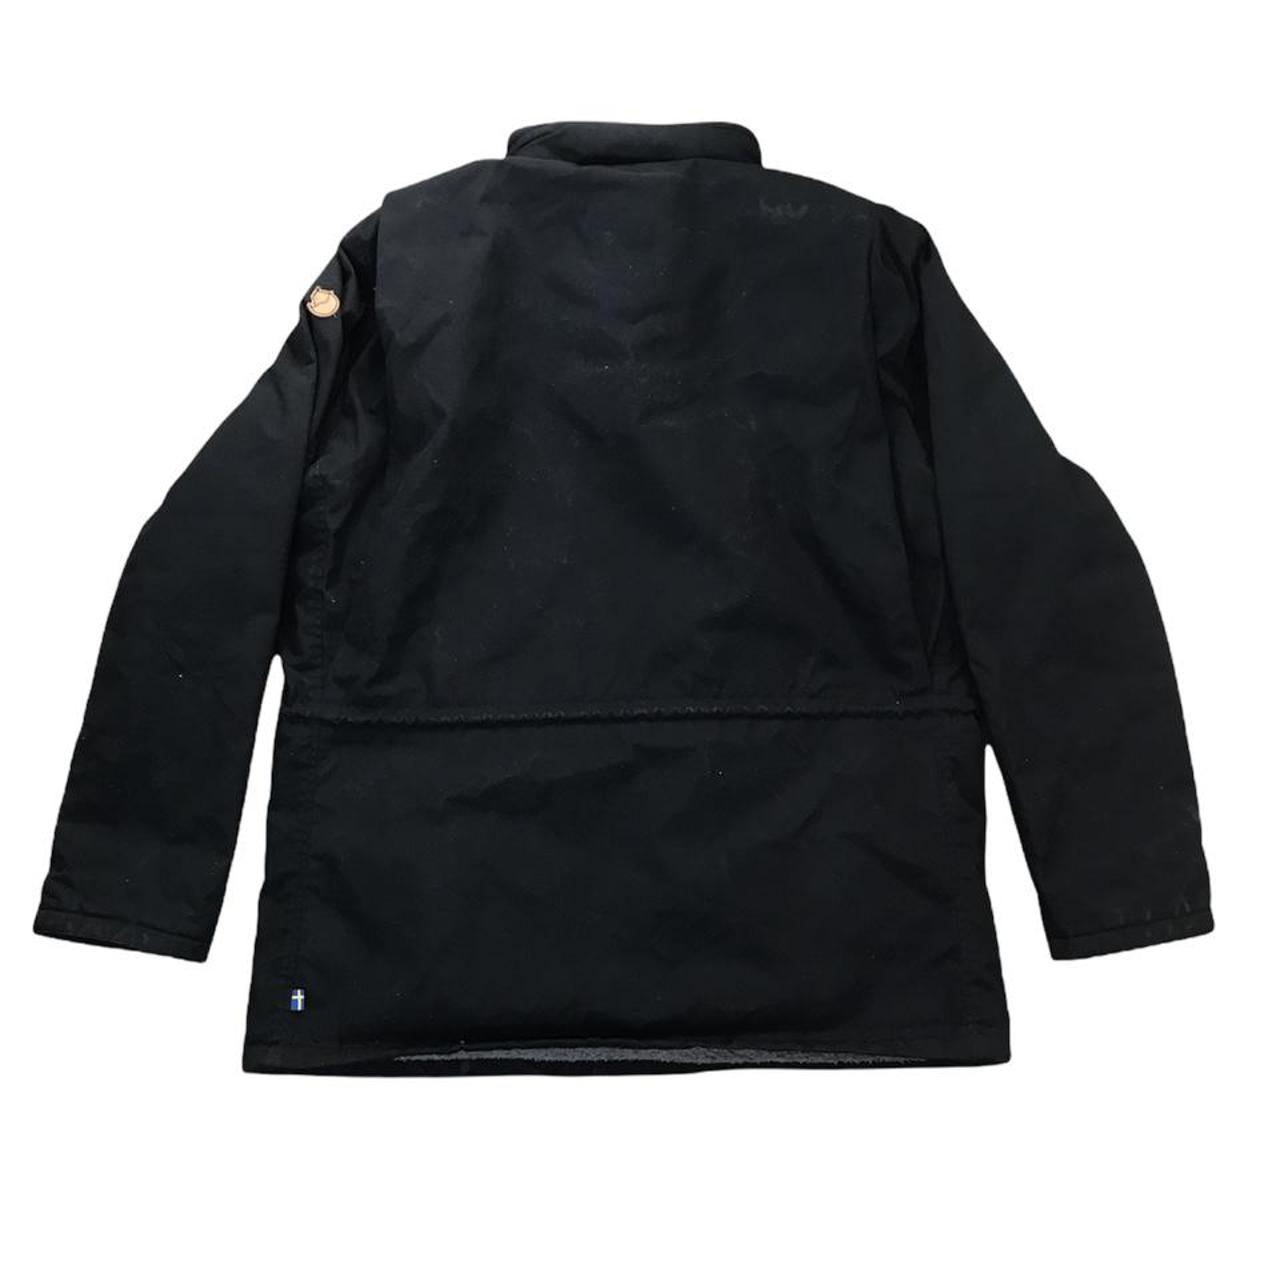 Product Image 2 - FjallRaven Jacket 

- Men’s size